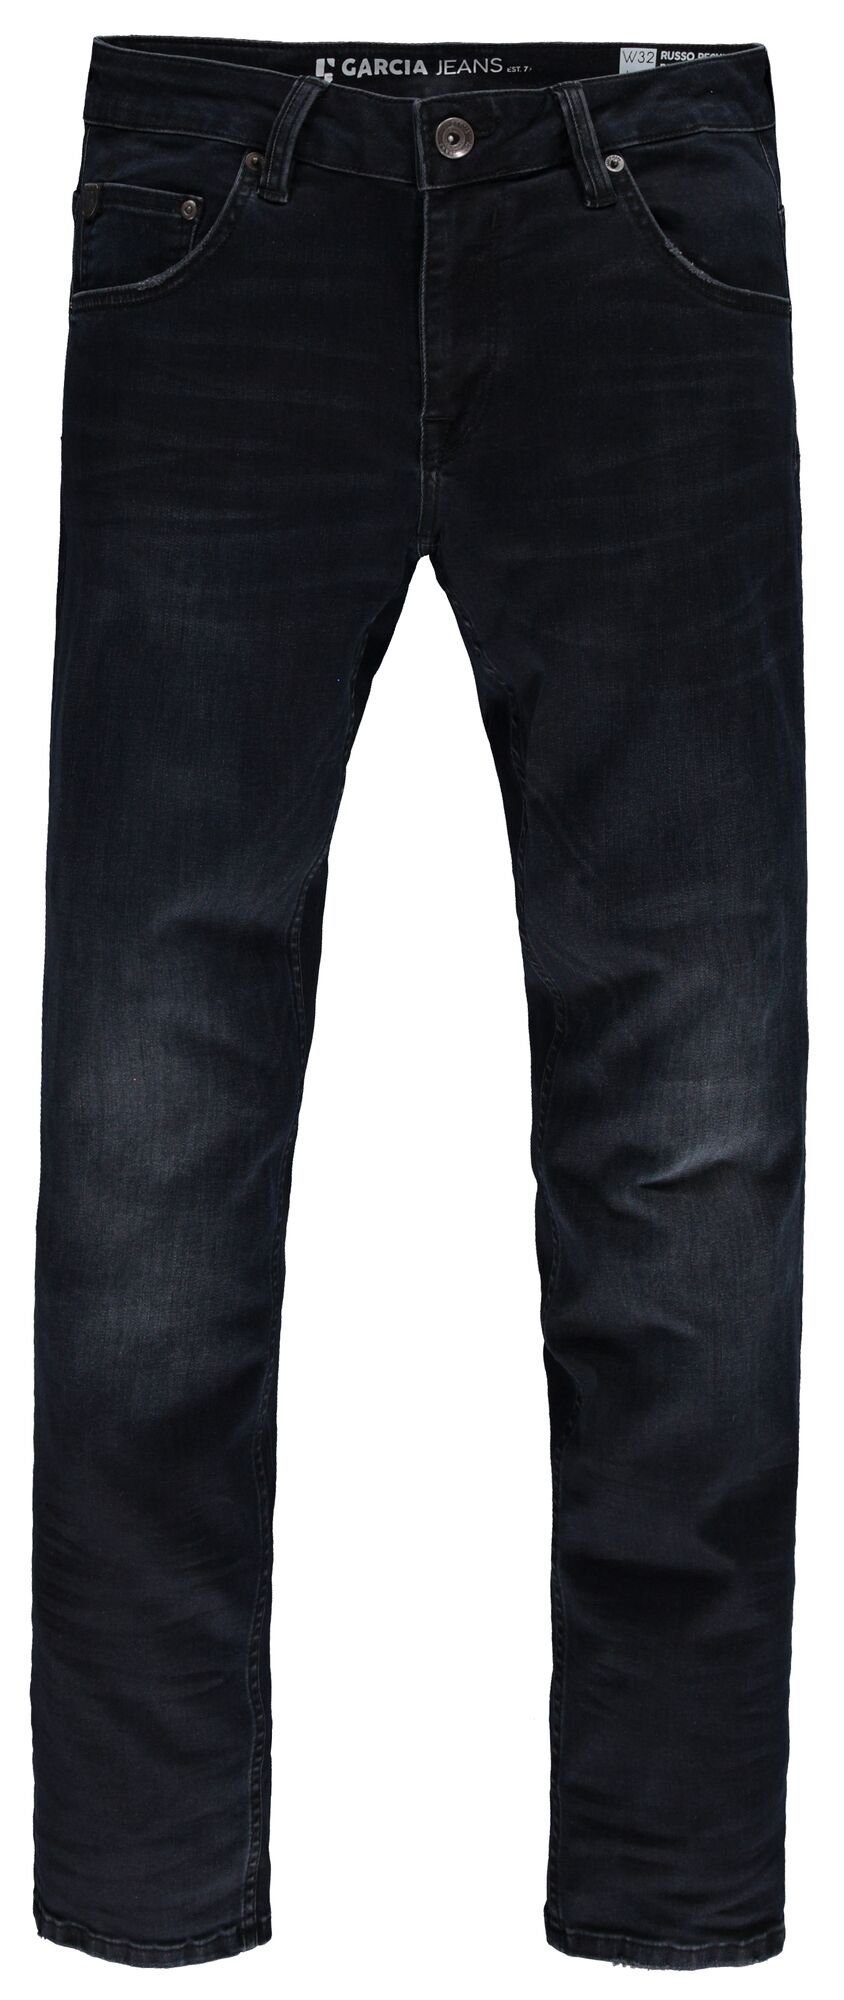 Herren Jeans GARCIA JEANS 5-Pocket-Jeans GARCIA RUSSO blue dark used 611.9510 - Flow Denim